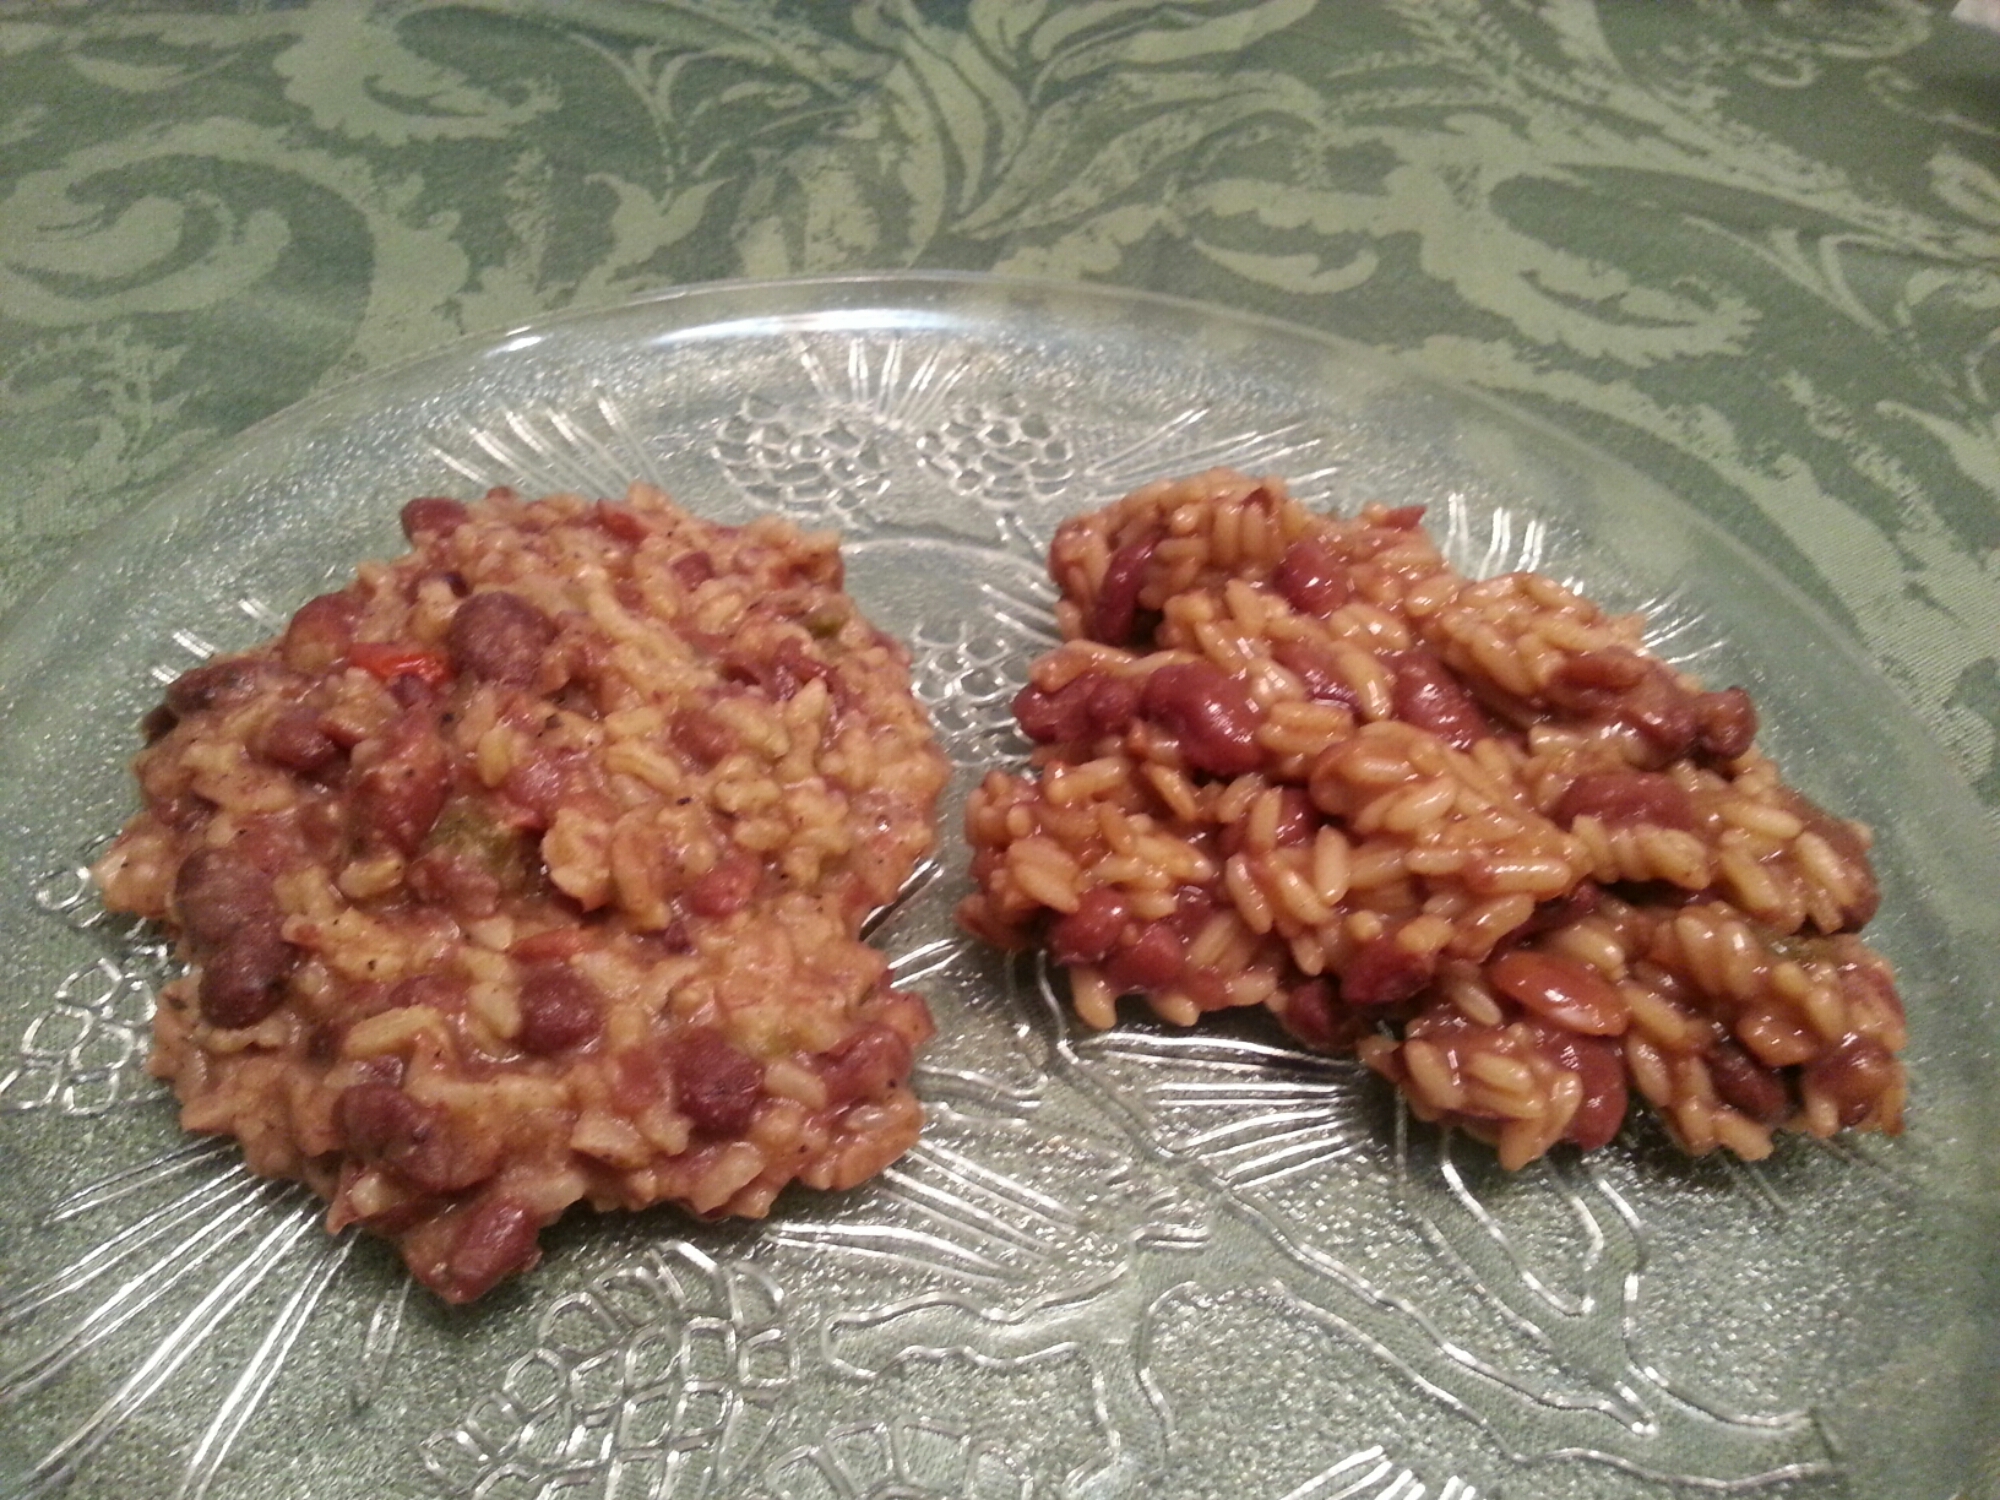 Zatarain's Red Beans & Rice Dinner Mix, 8 oz, Rice, Grains & Dried Beans